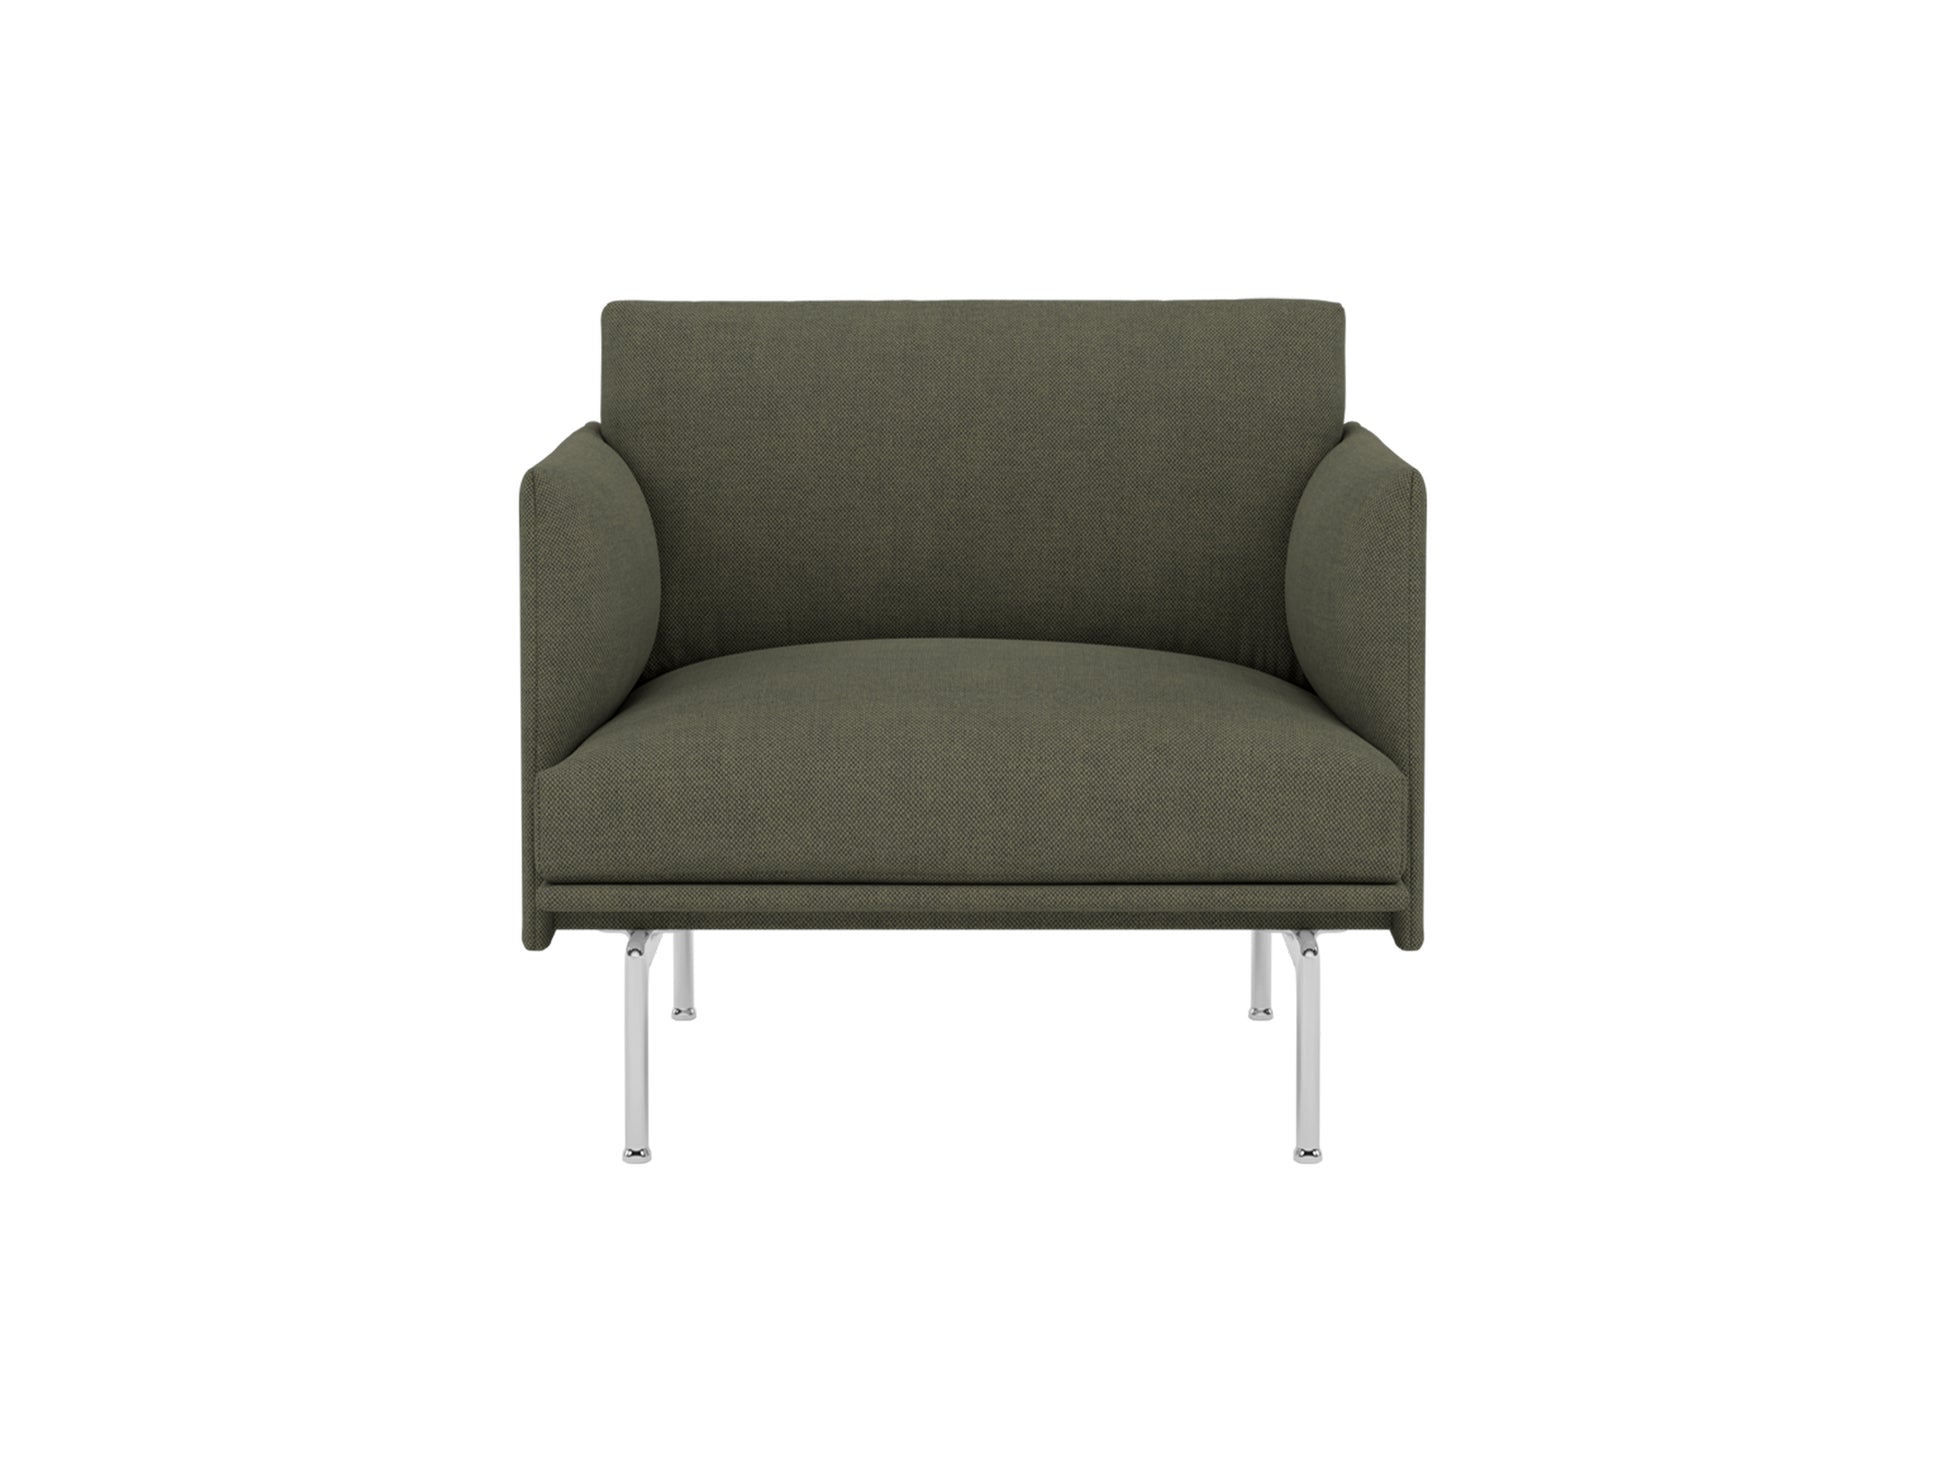 Outline Studio Chair by Muuto - Aluminium Base / Fiord 961